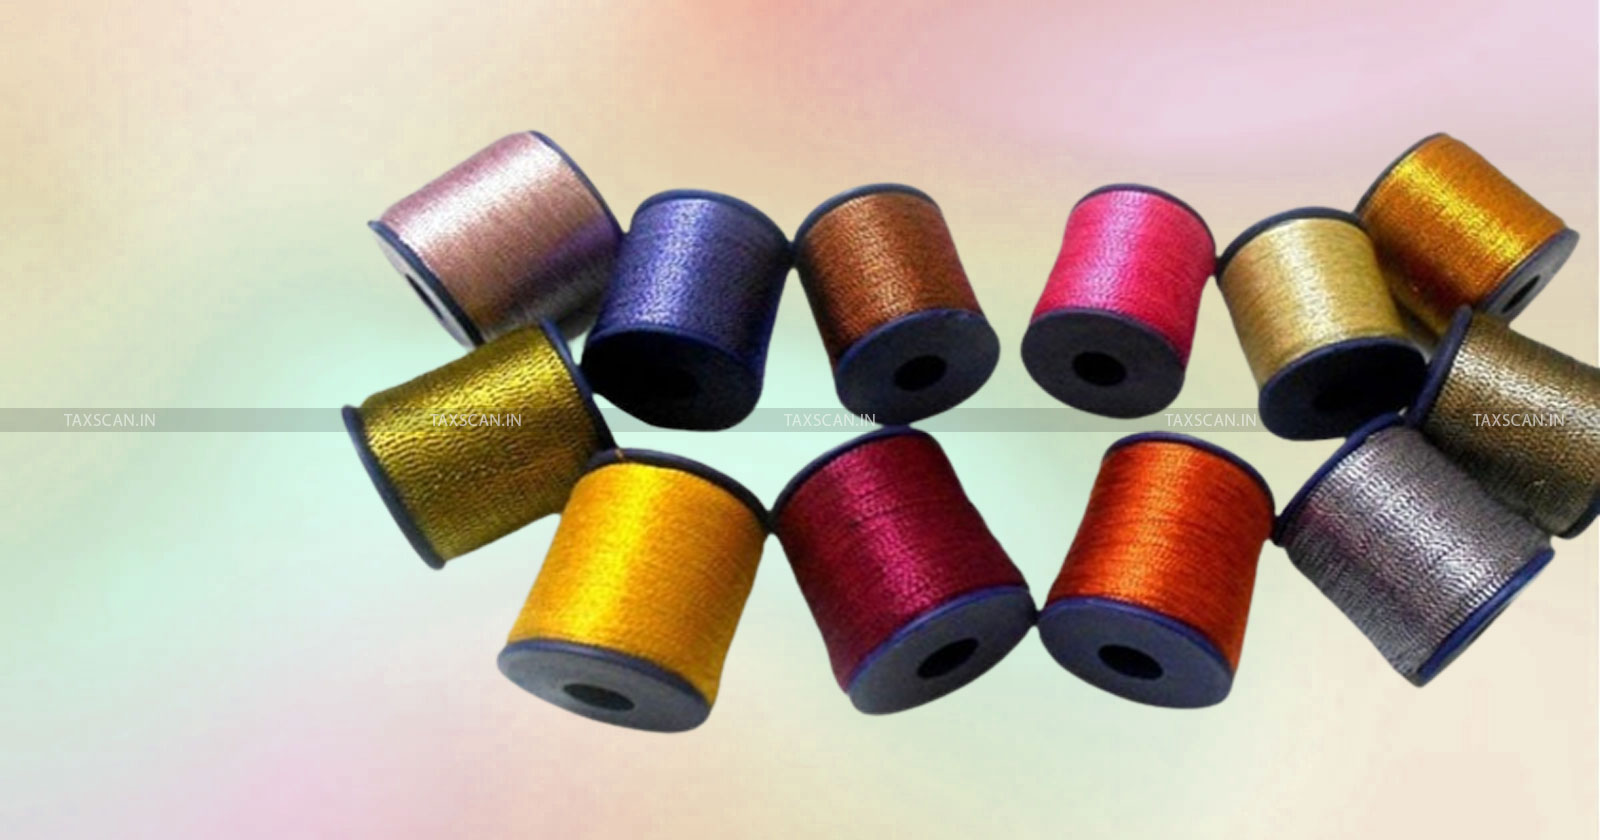 CBIC Inserts New Entry for Imitation Zari Thread - Yarn Made - Metallised Polyester Film - plastic Film - ITC Refund - taxscan